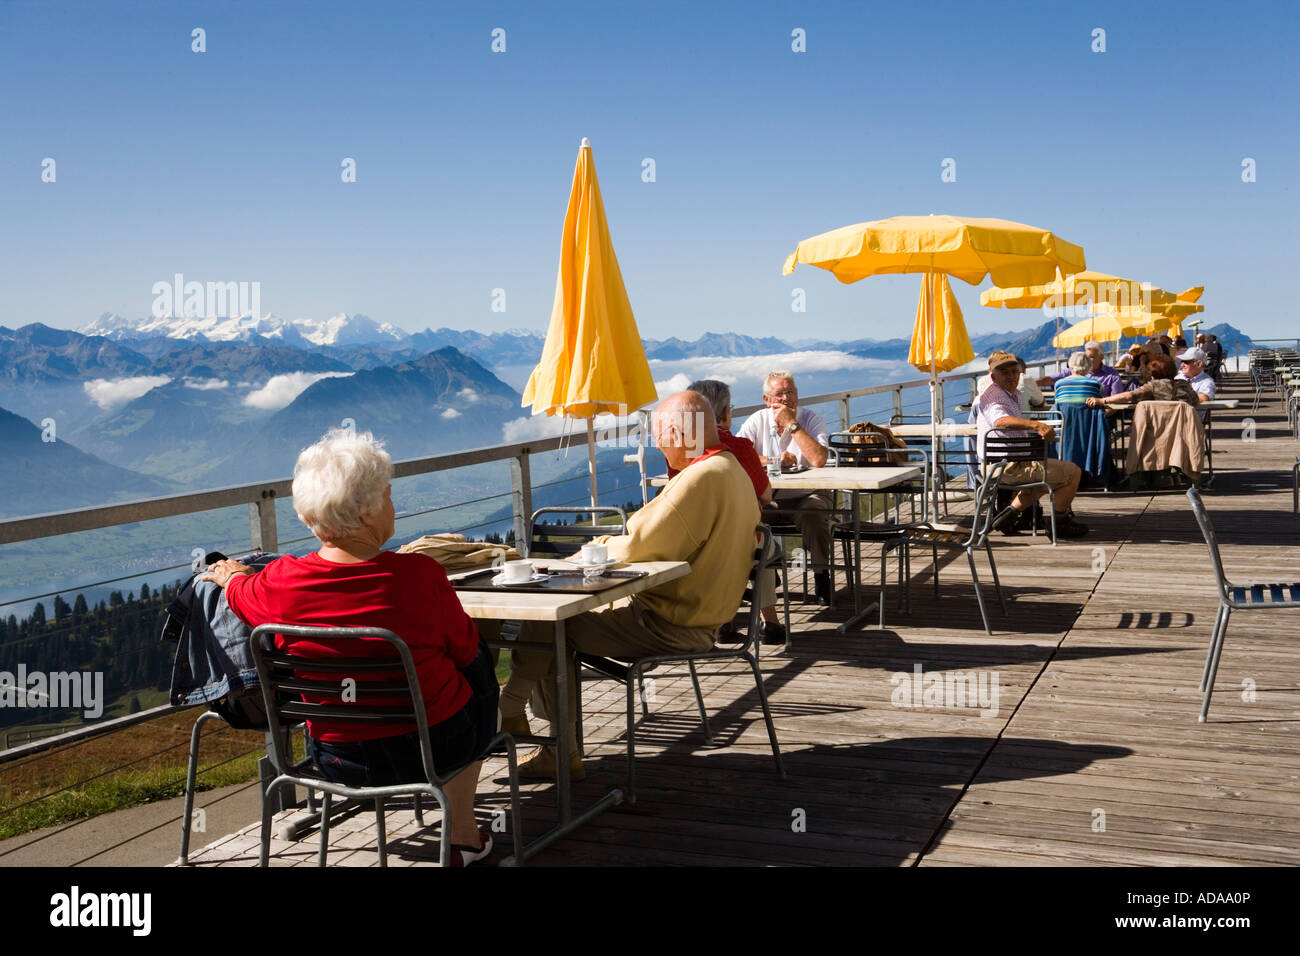 https://c8.alamy.com/comp/ADAA0P/terrace-of-restaurant-hotel-rigi-kulm-mountain-panorama-in-background-ADAA0P.jpg